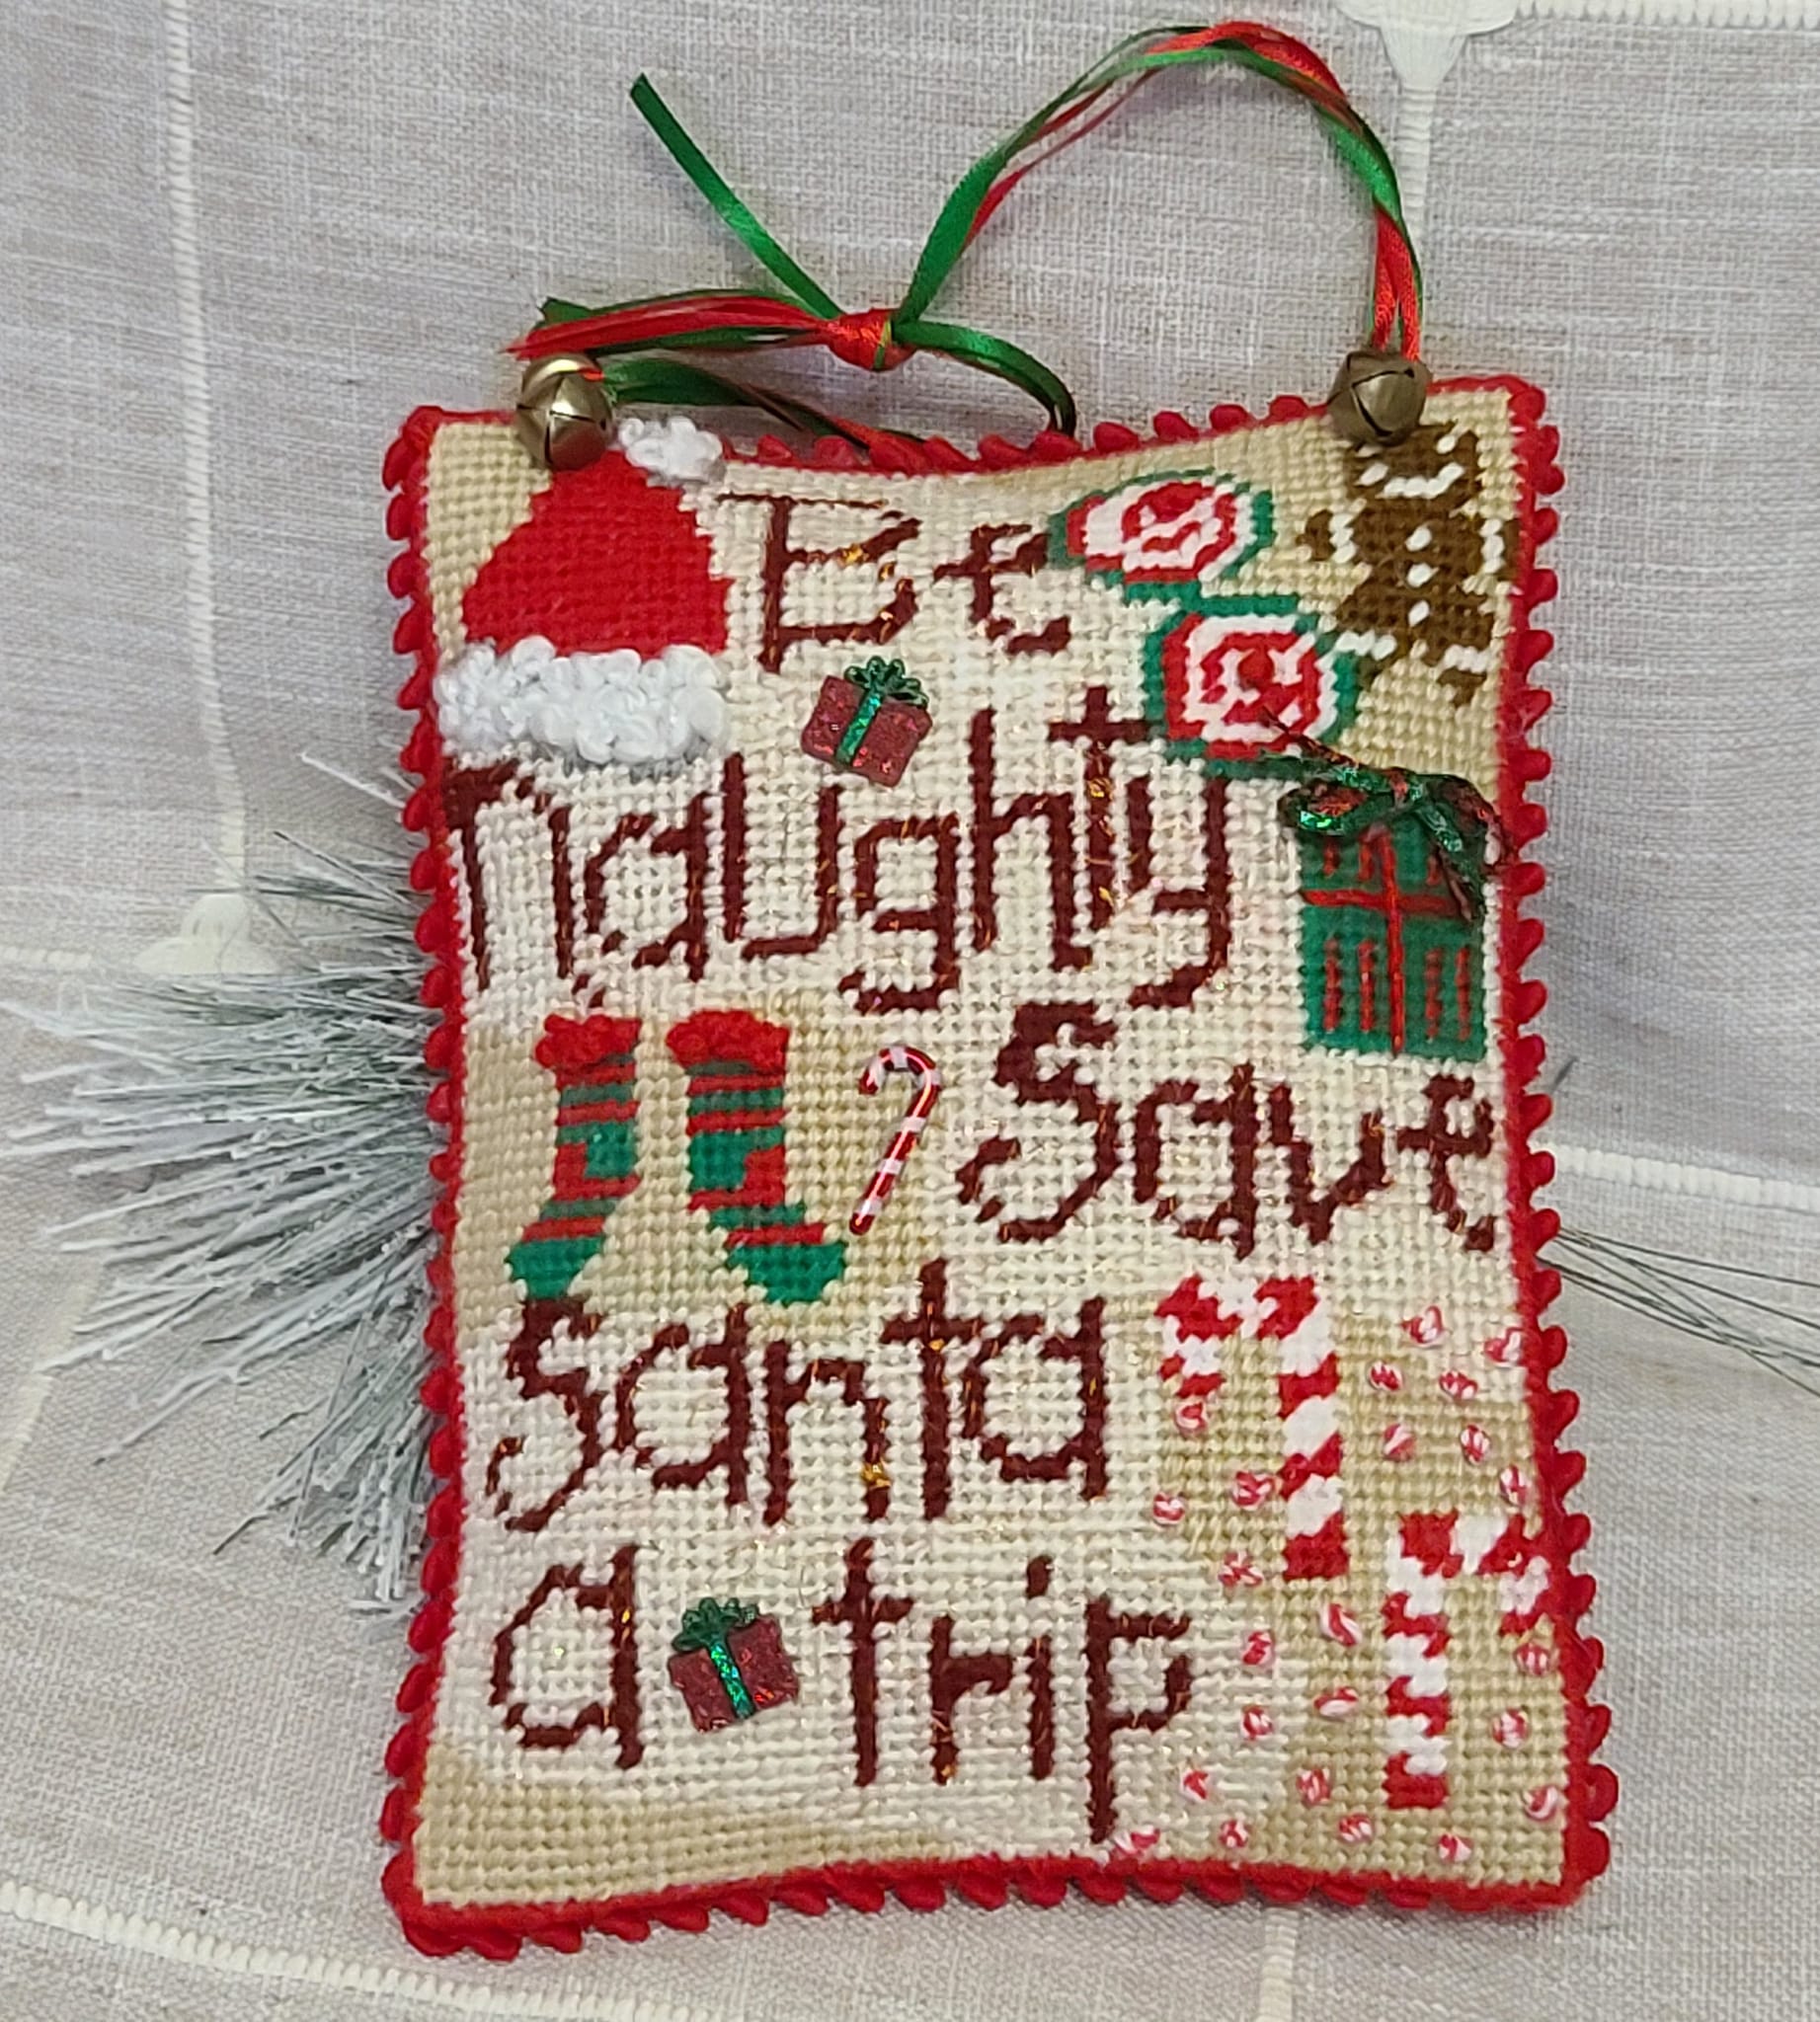 Needlepoint Save Santa a trip with embellisments, door hanger